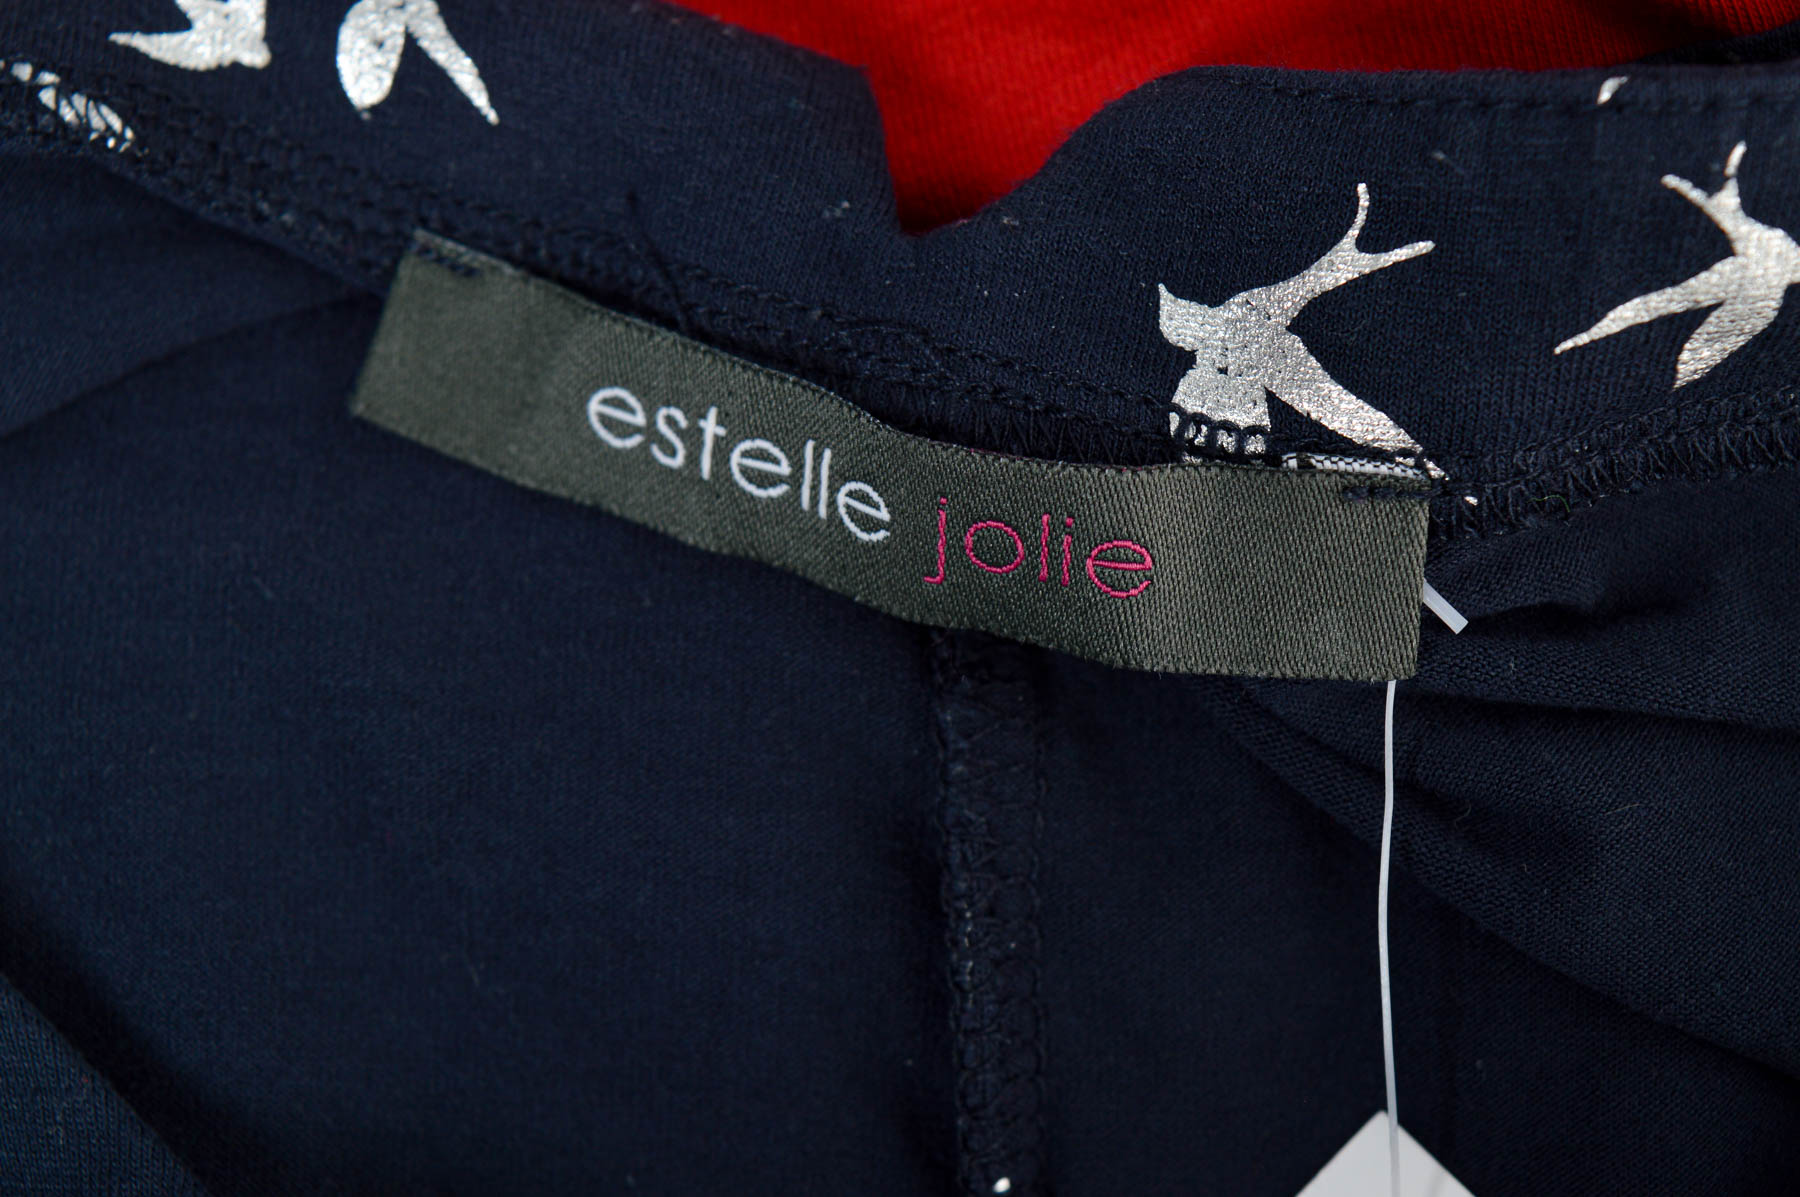 Bluzka damska - Estelle jolie - 2